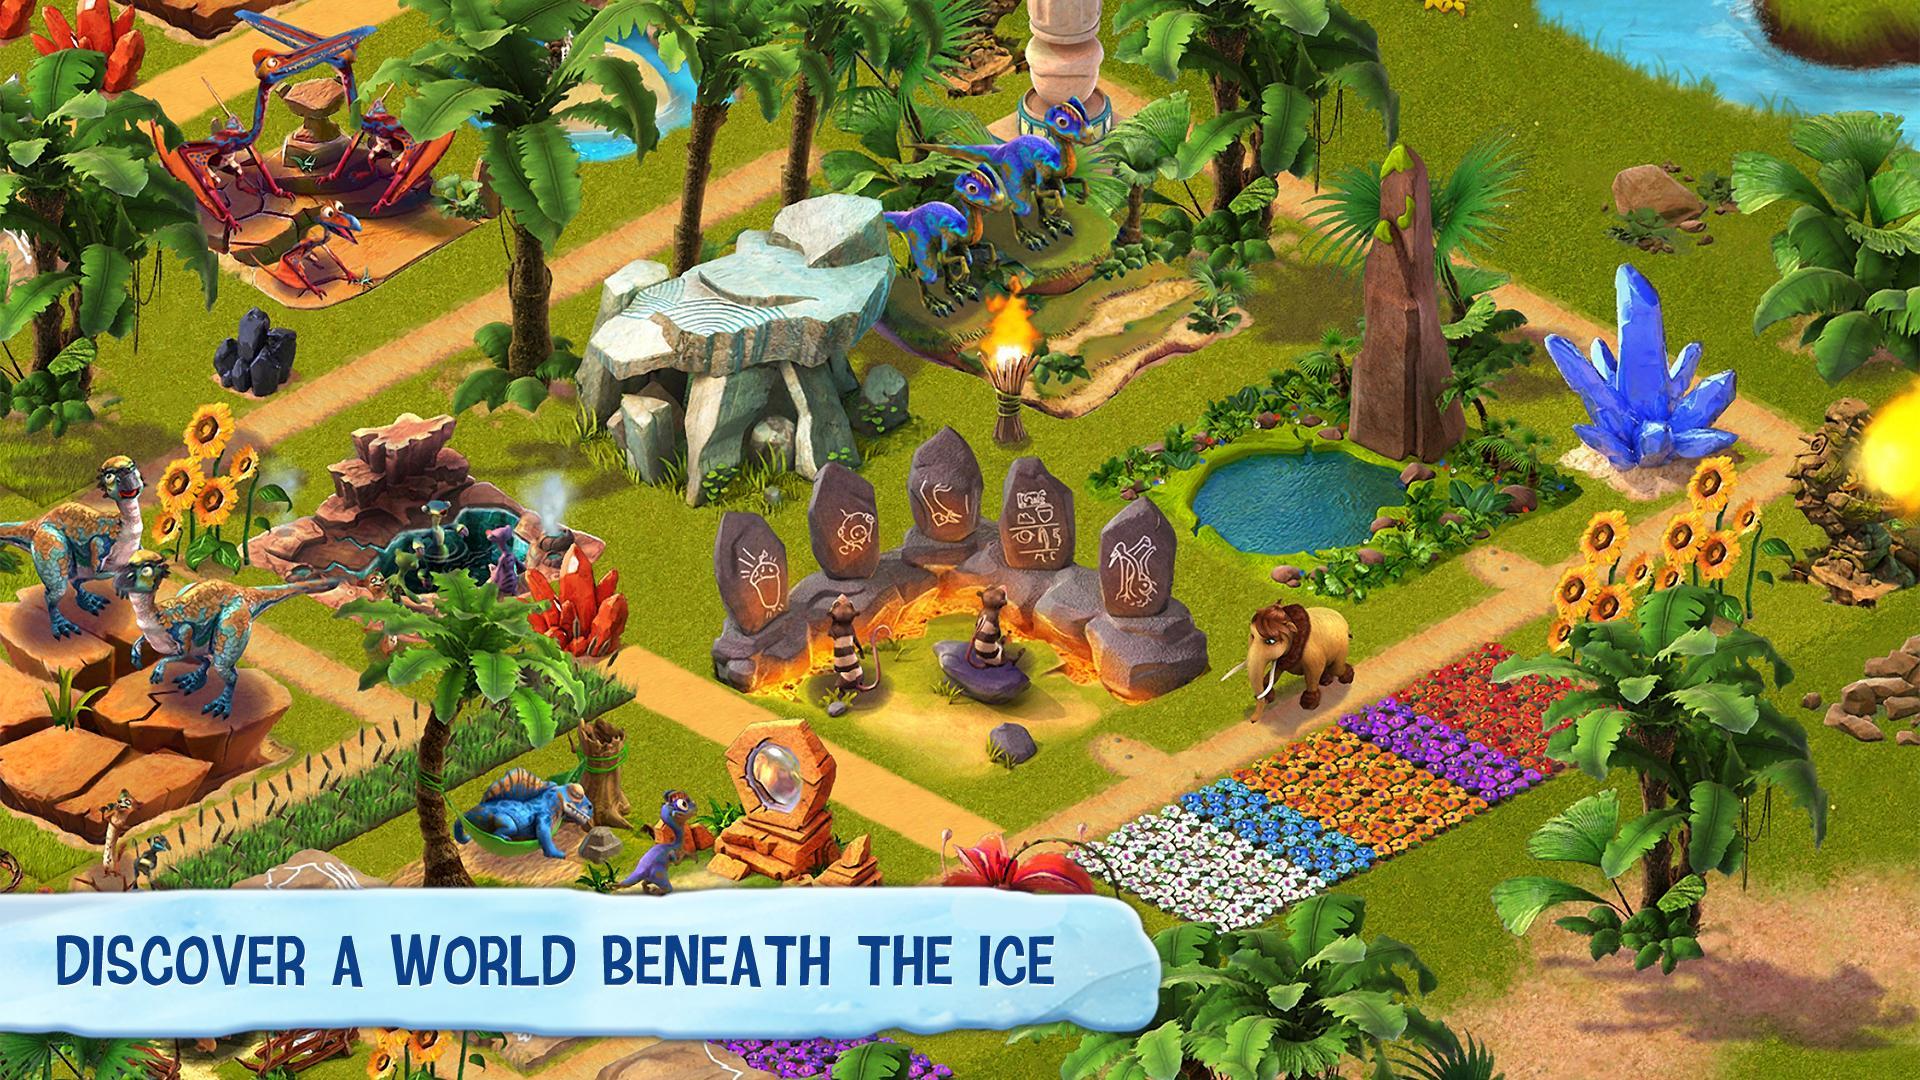 Screenshot of Ice Age Village